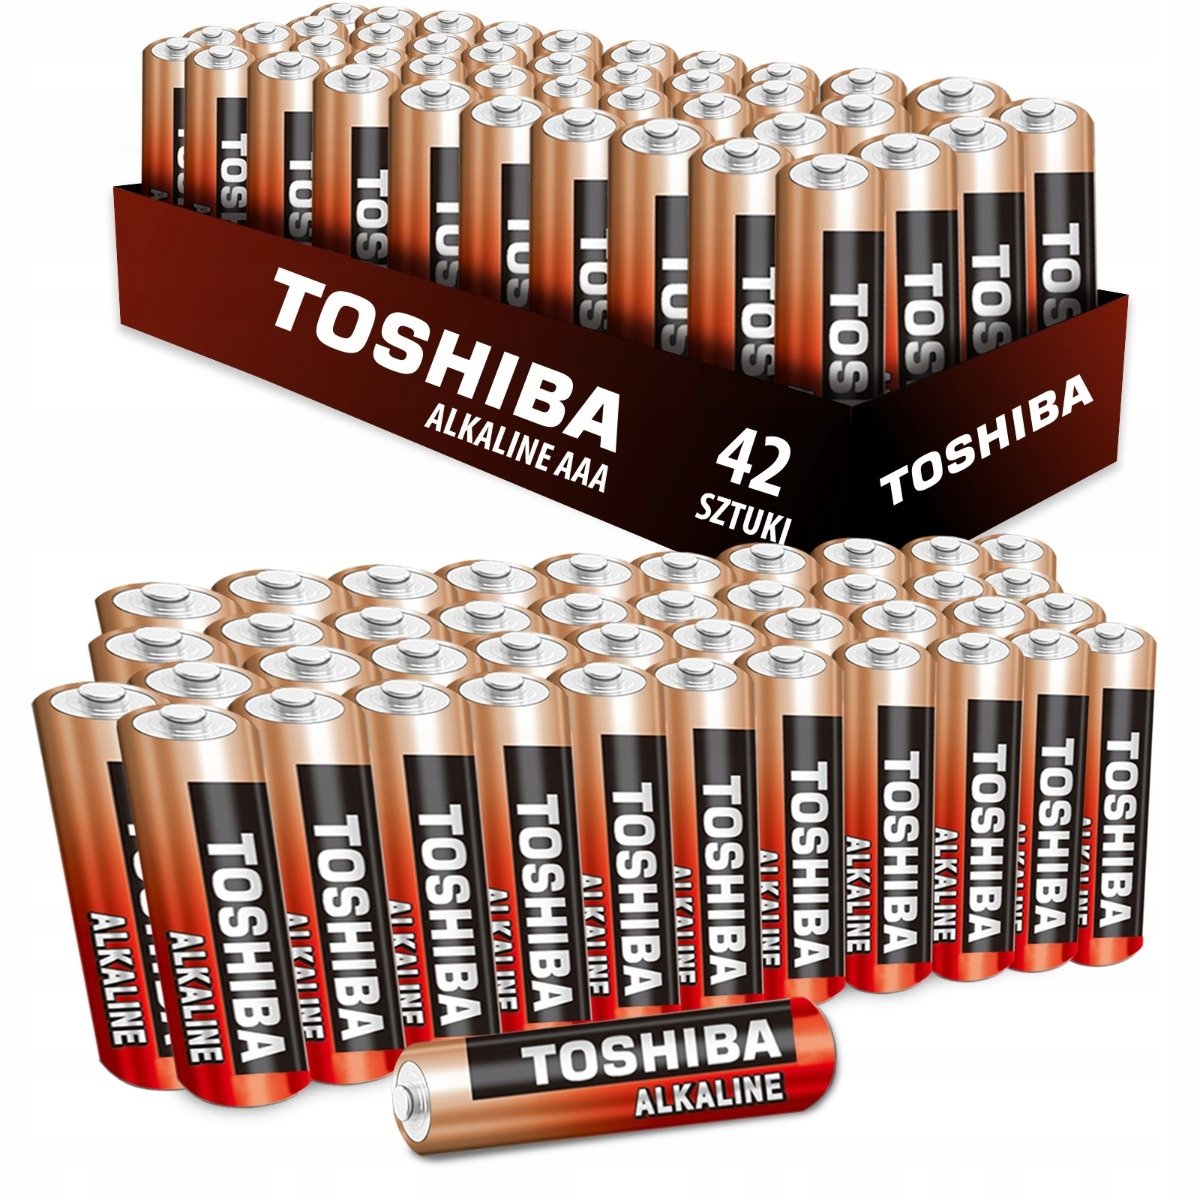 Zdjęcia - Bateria / akumulator Toshiba Zestaw 42x Baterie Alkaliczne  RED ALKALINE LR03 AAA 1,5V 